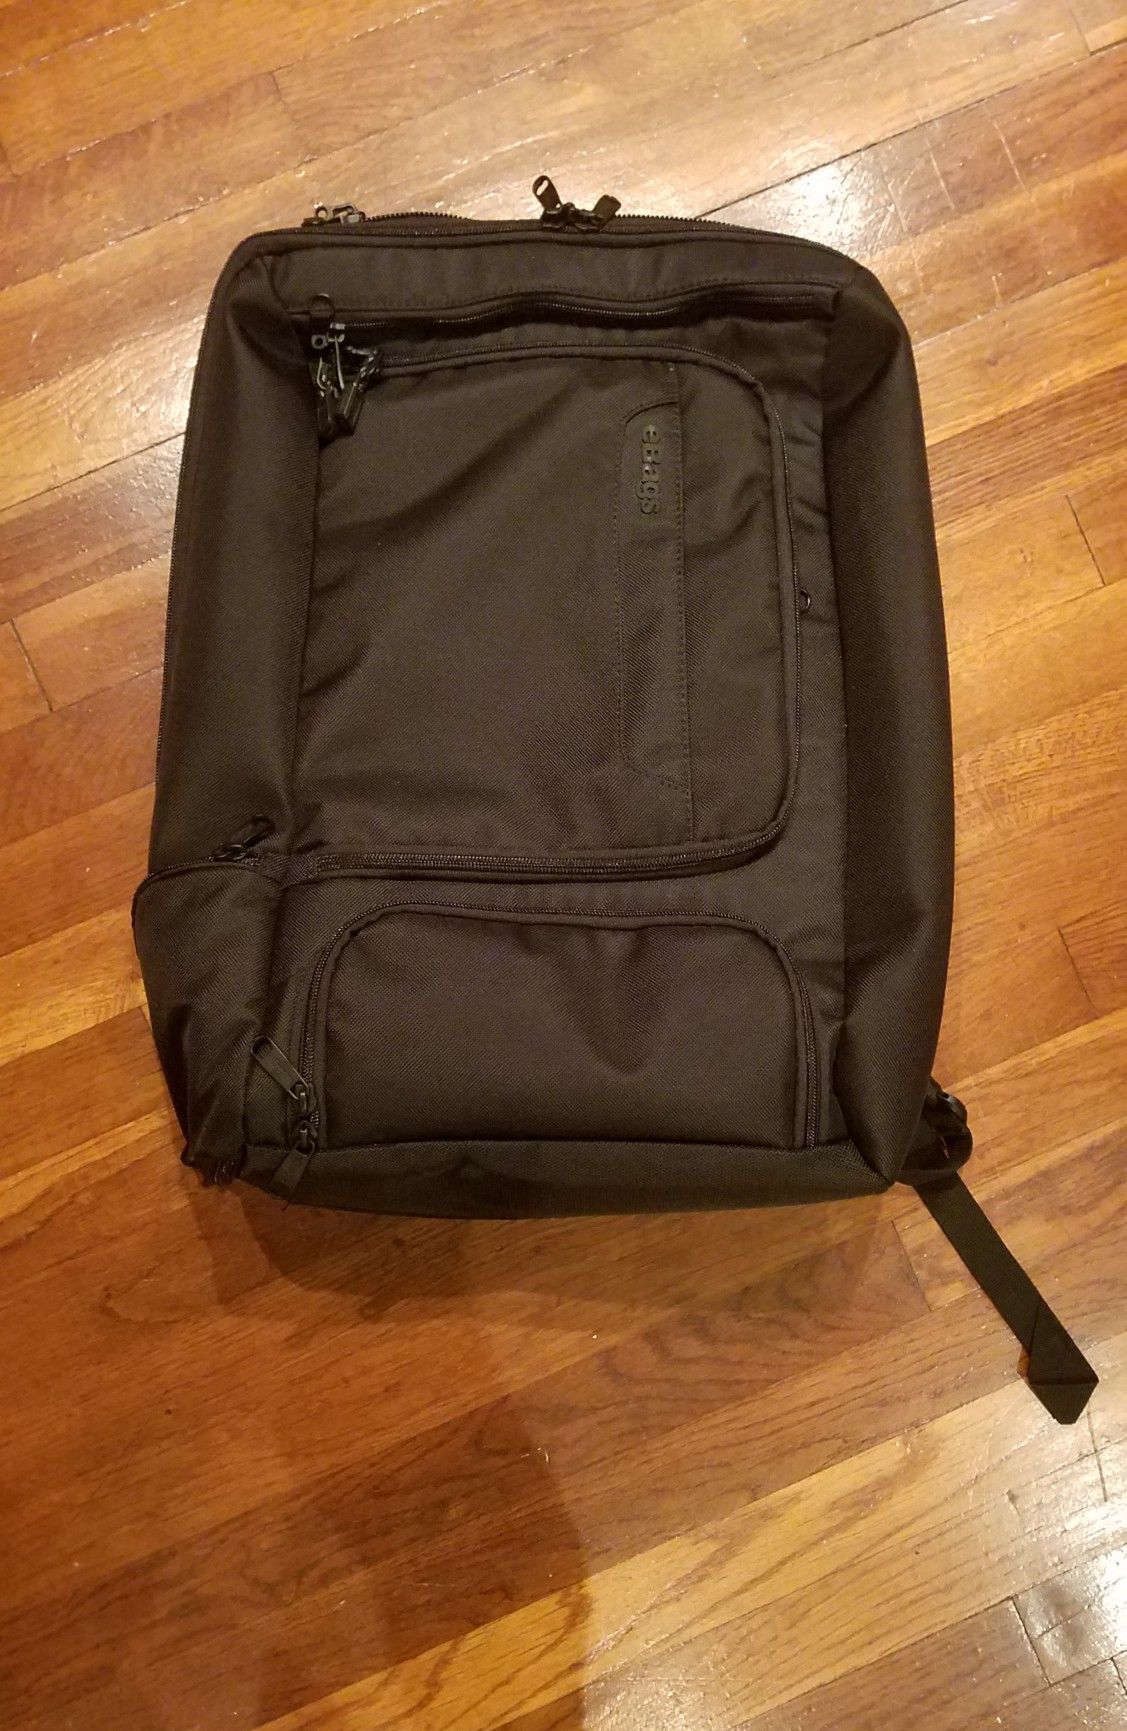 E bag backpack luggage travel case